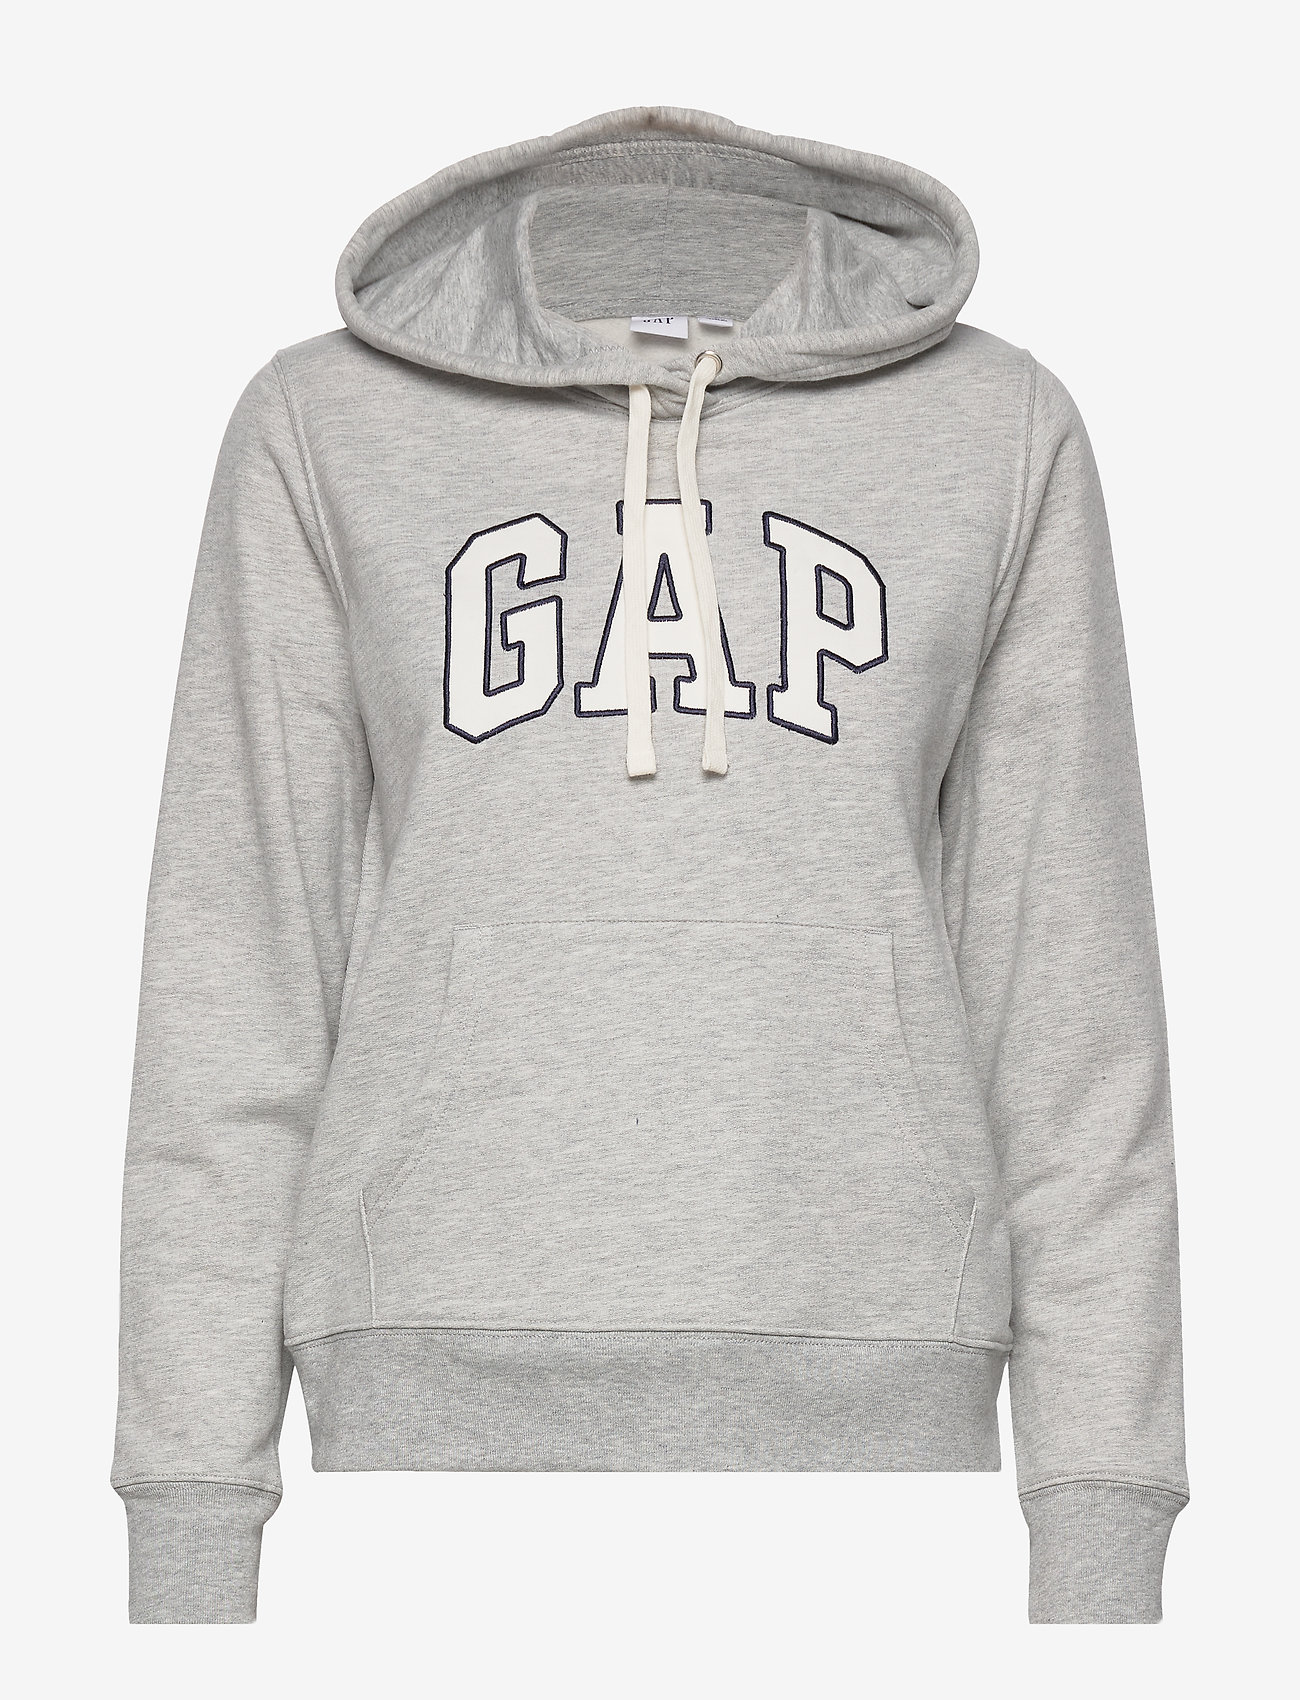 black and white gap hoodie